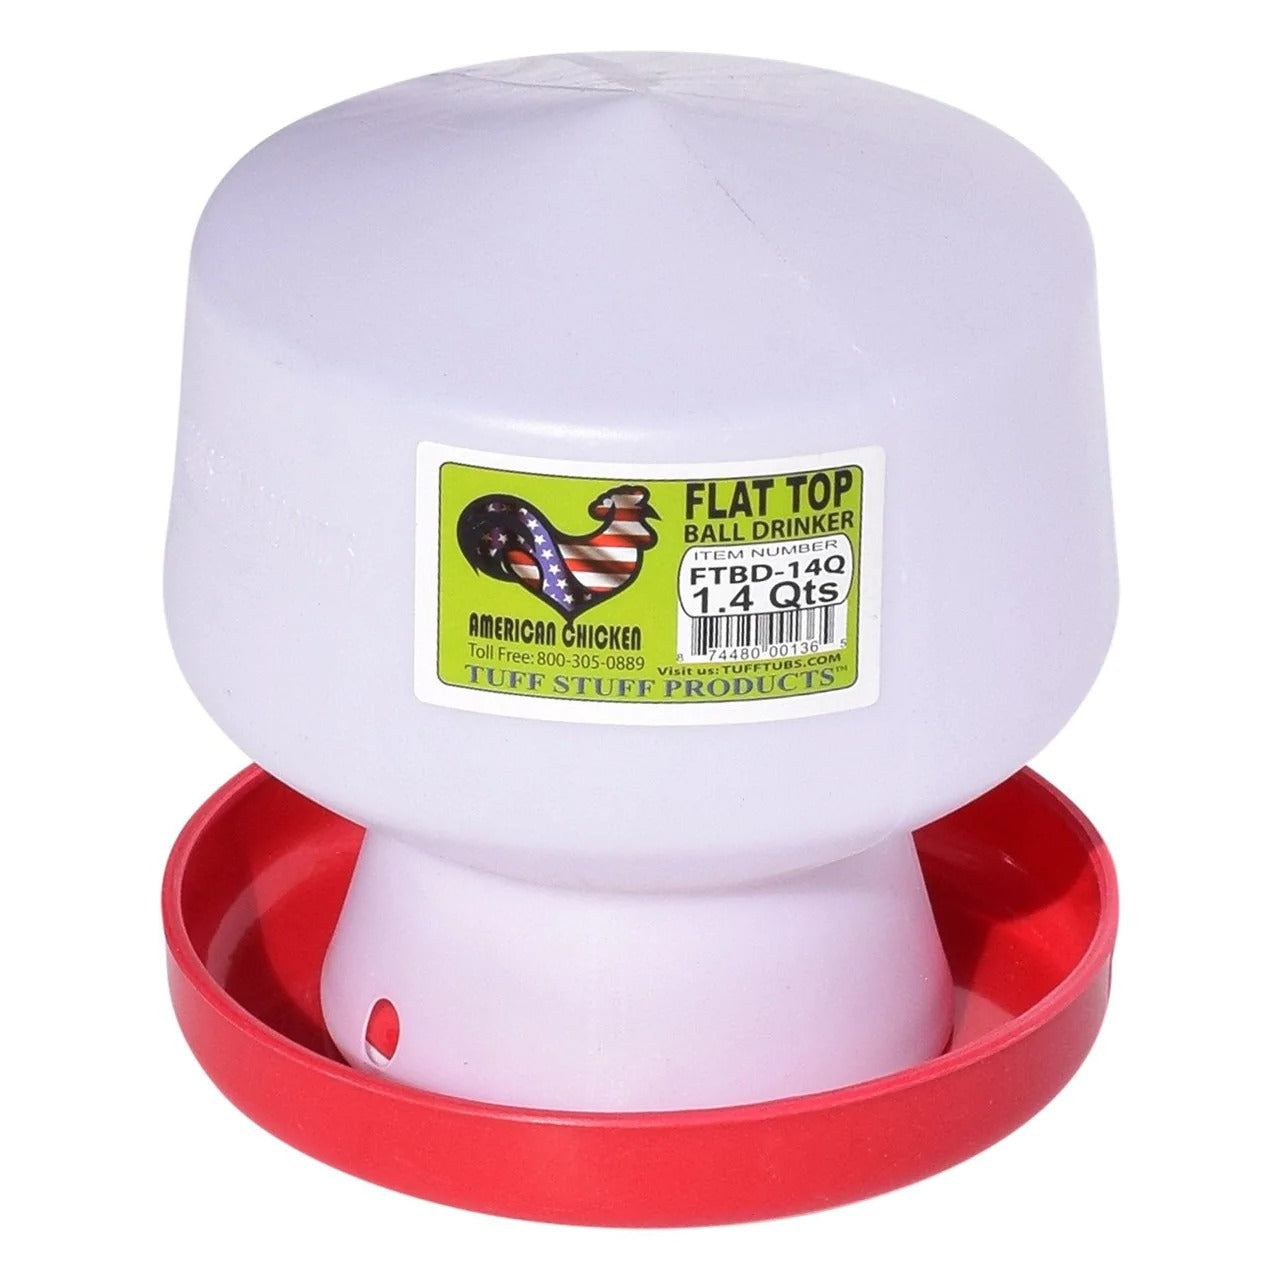 TuffStuff Poultry Flat Top Ball Drinker - 1.4qts